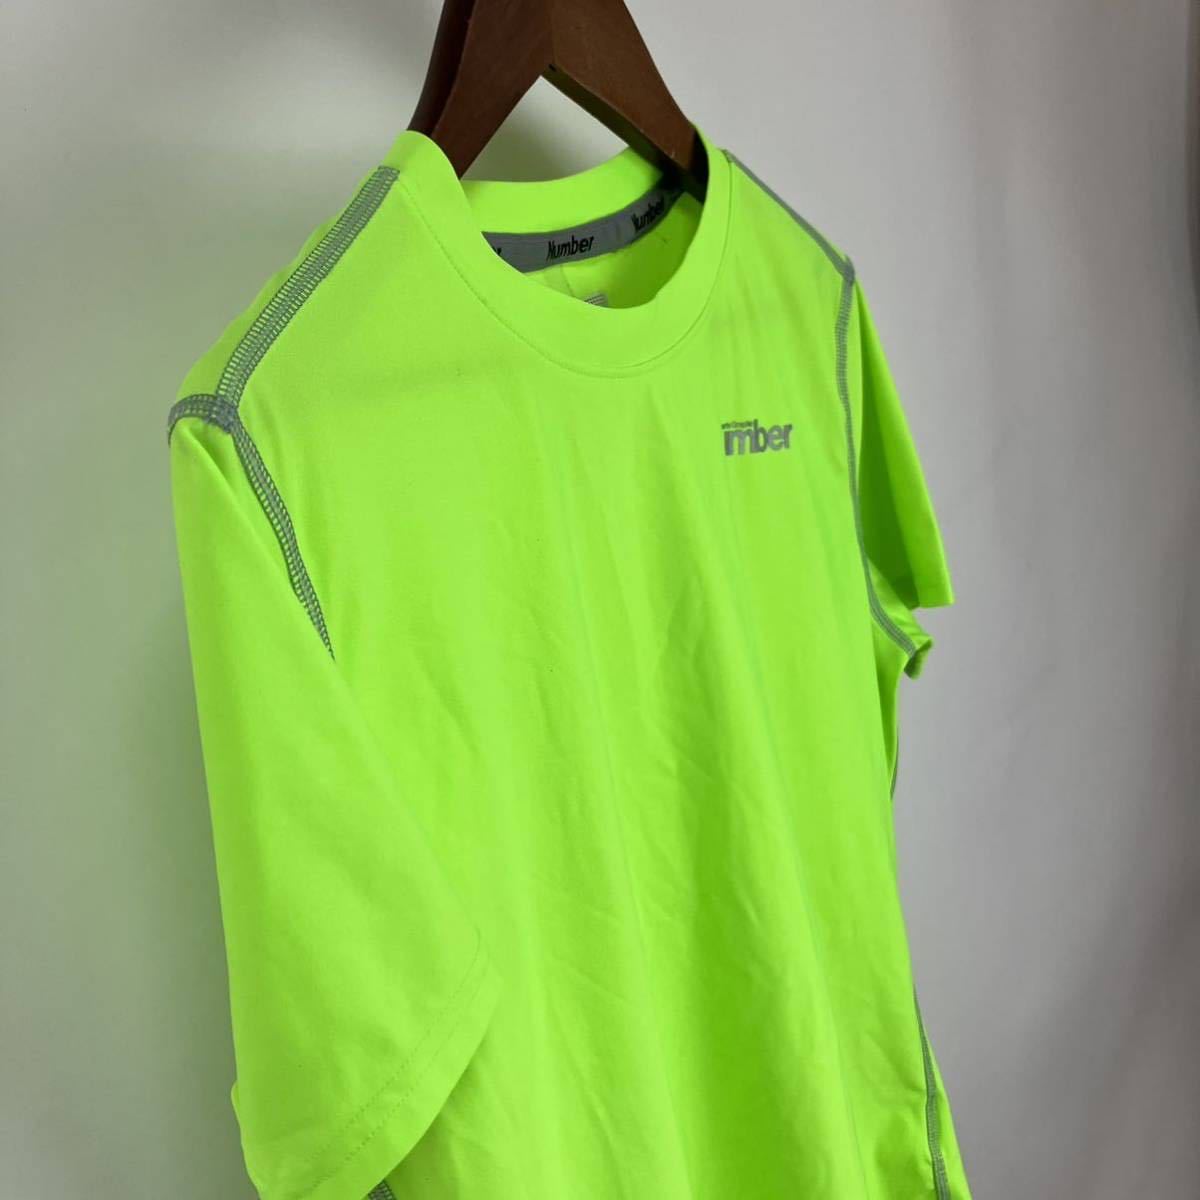 Nambar ナンバー メンズ スポーツウェア 半袖Tシャツ トップス 蛍光色Tシャツ 丸首 ポリエステル製 ランニングウェア トレーニングウェア